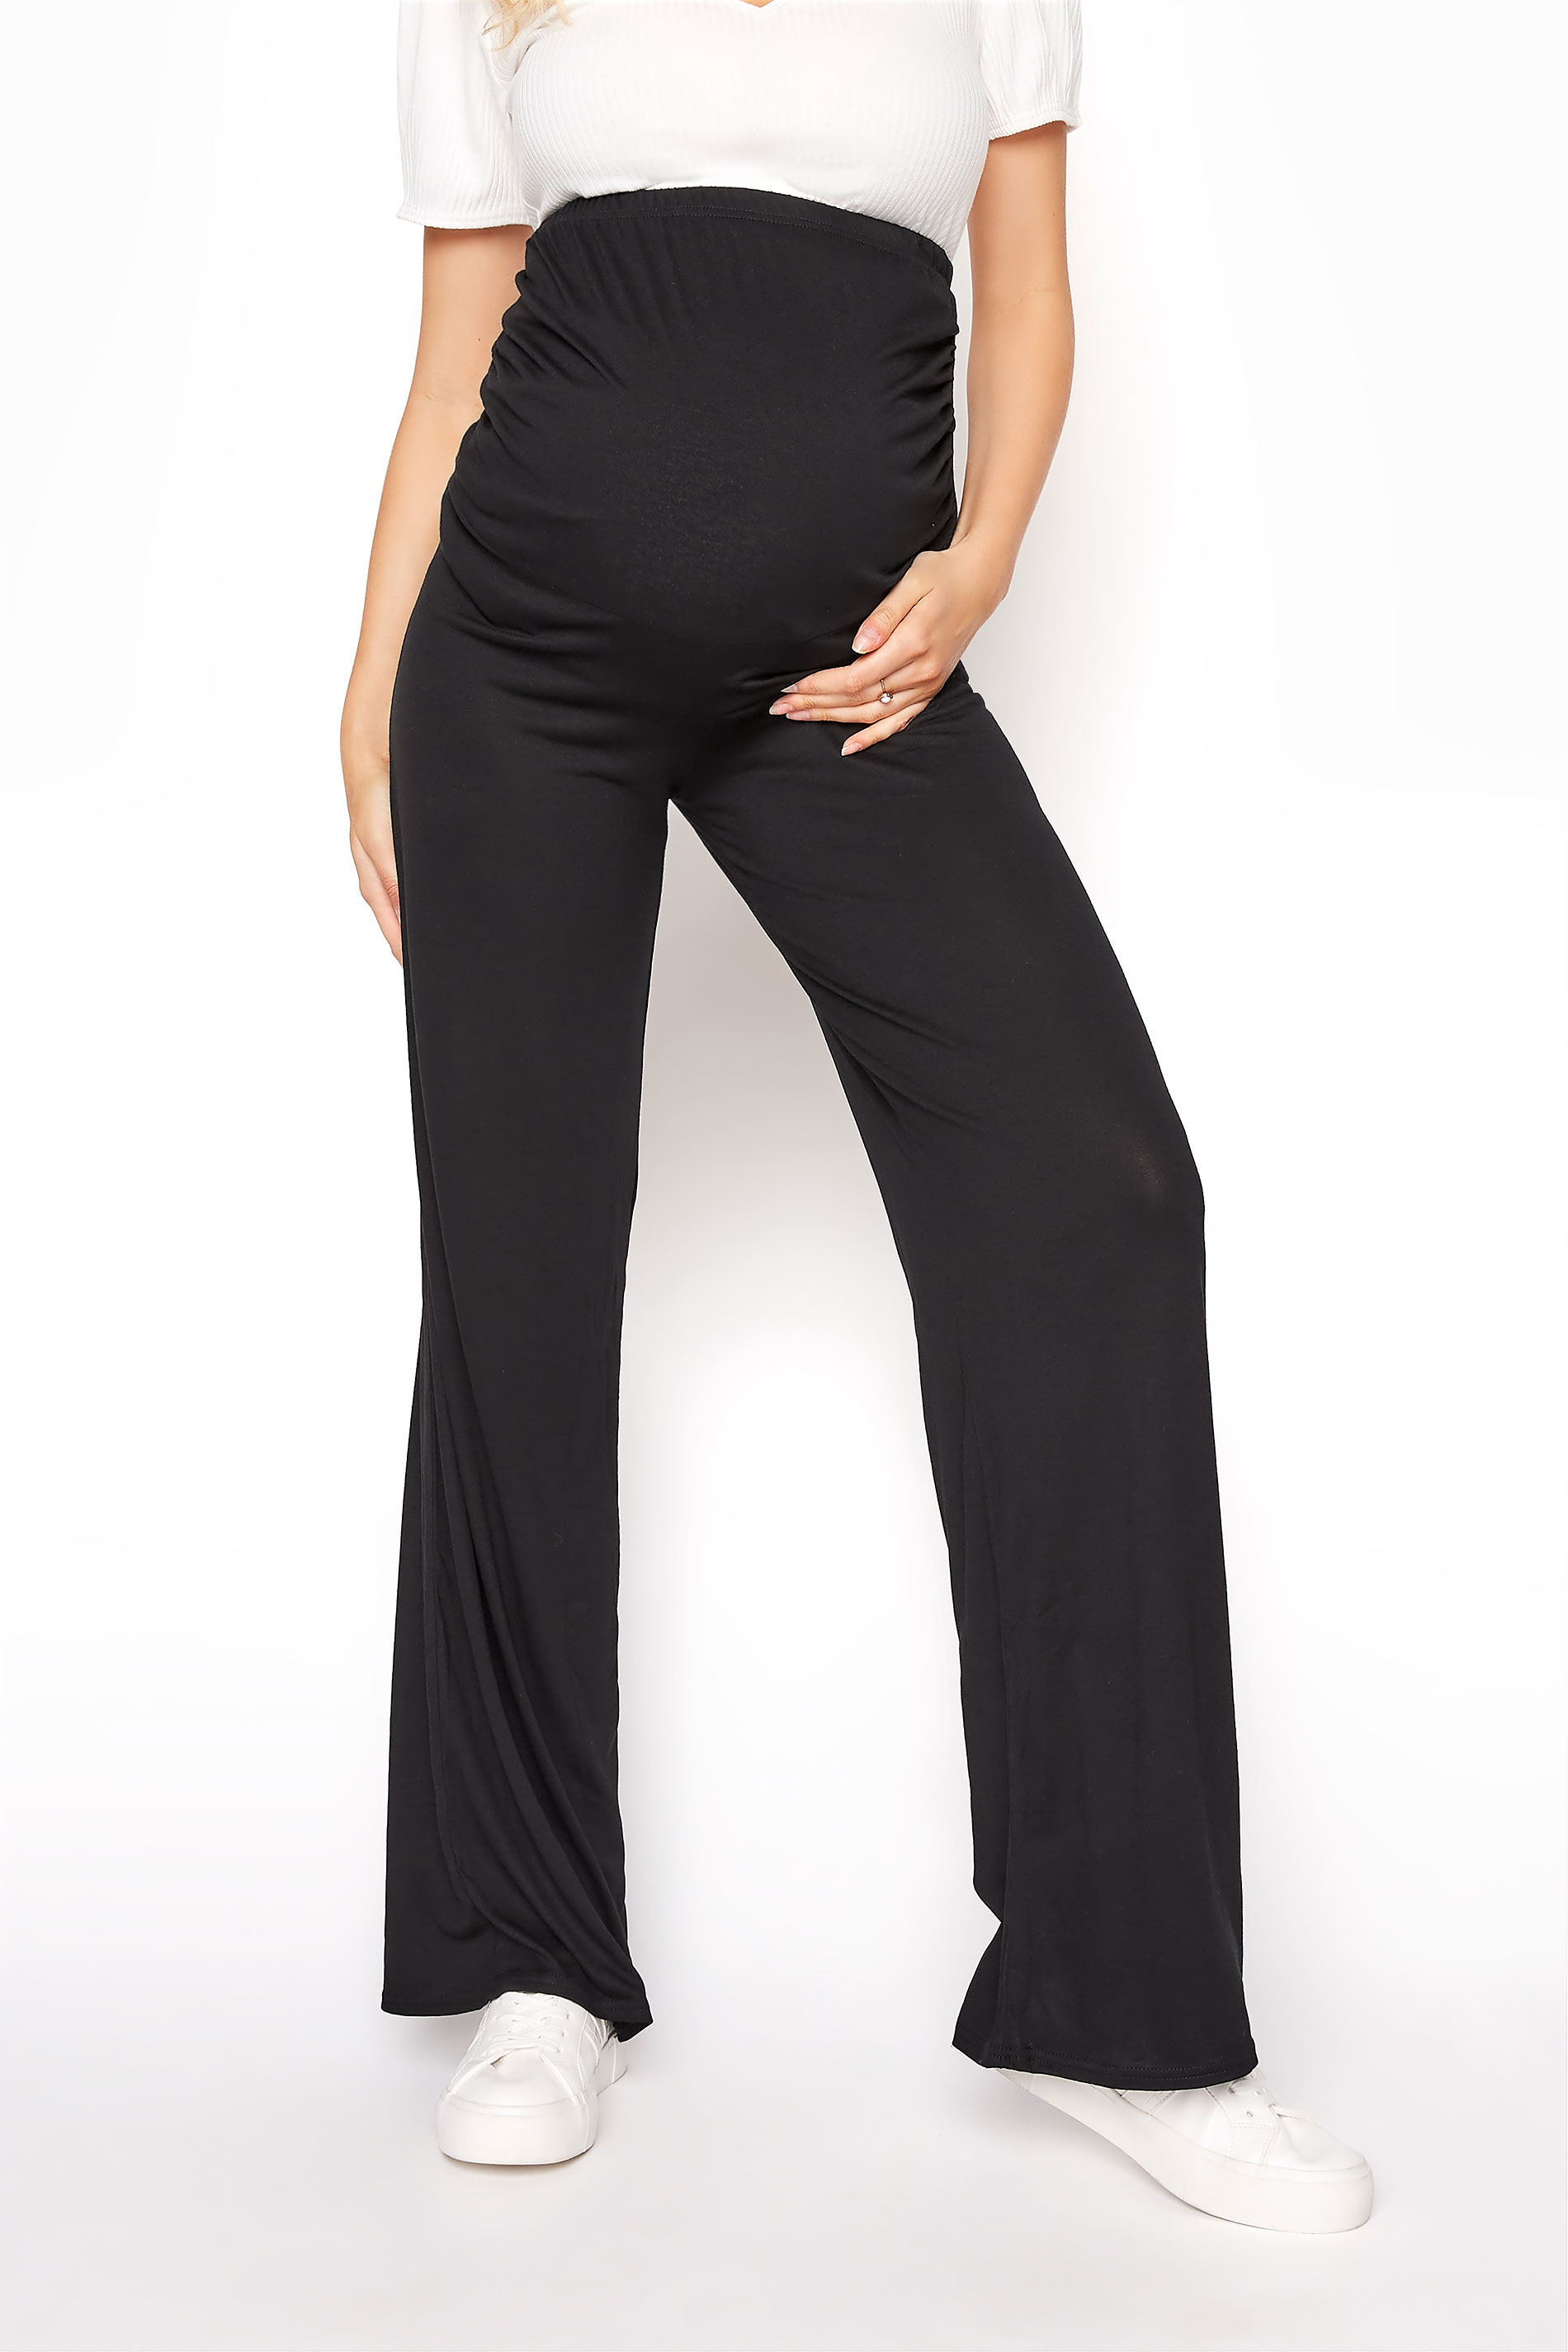 LTS Maternity Black Wide Leg Trousers | Long Tall Sally